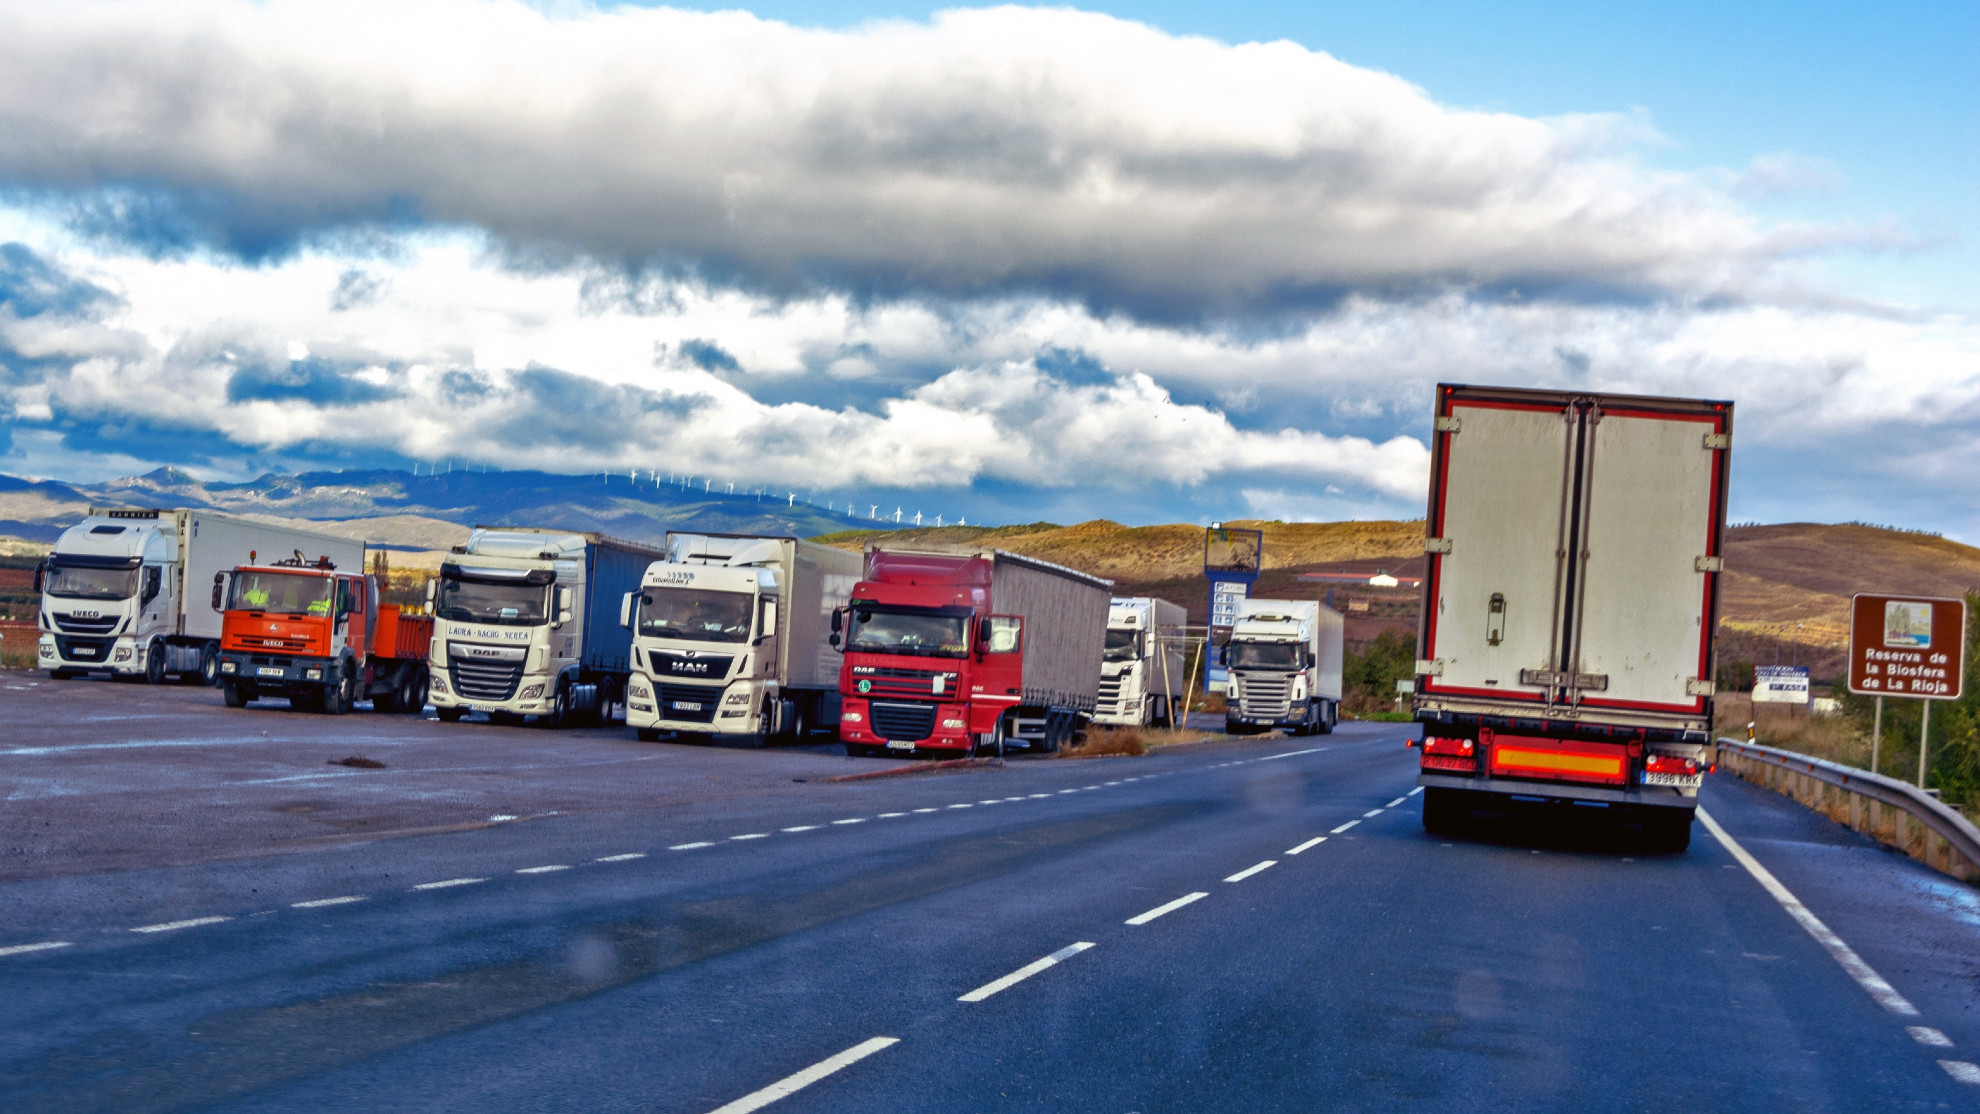 Huelga de camioneros - Paro de transporte - Combustibles - Gasolina - Gasoil - Plataforma Nacional